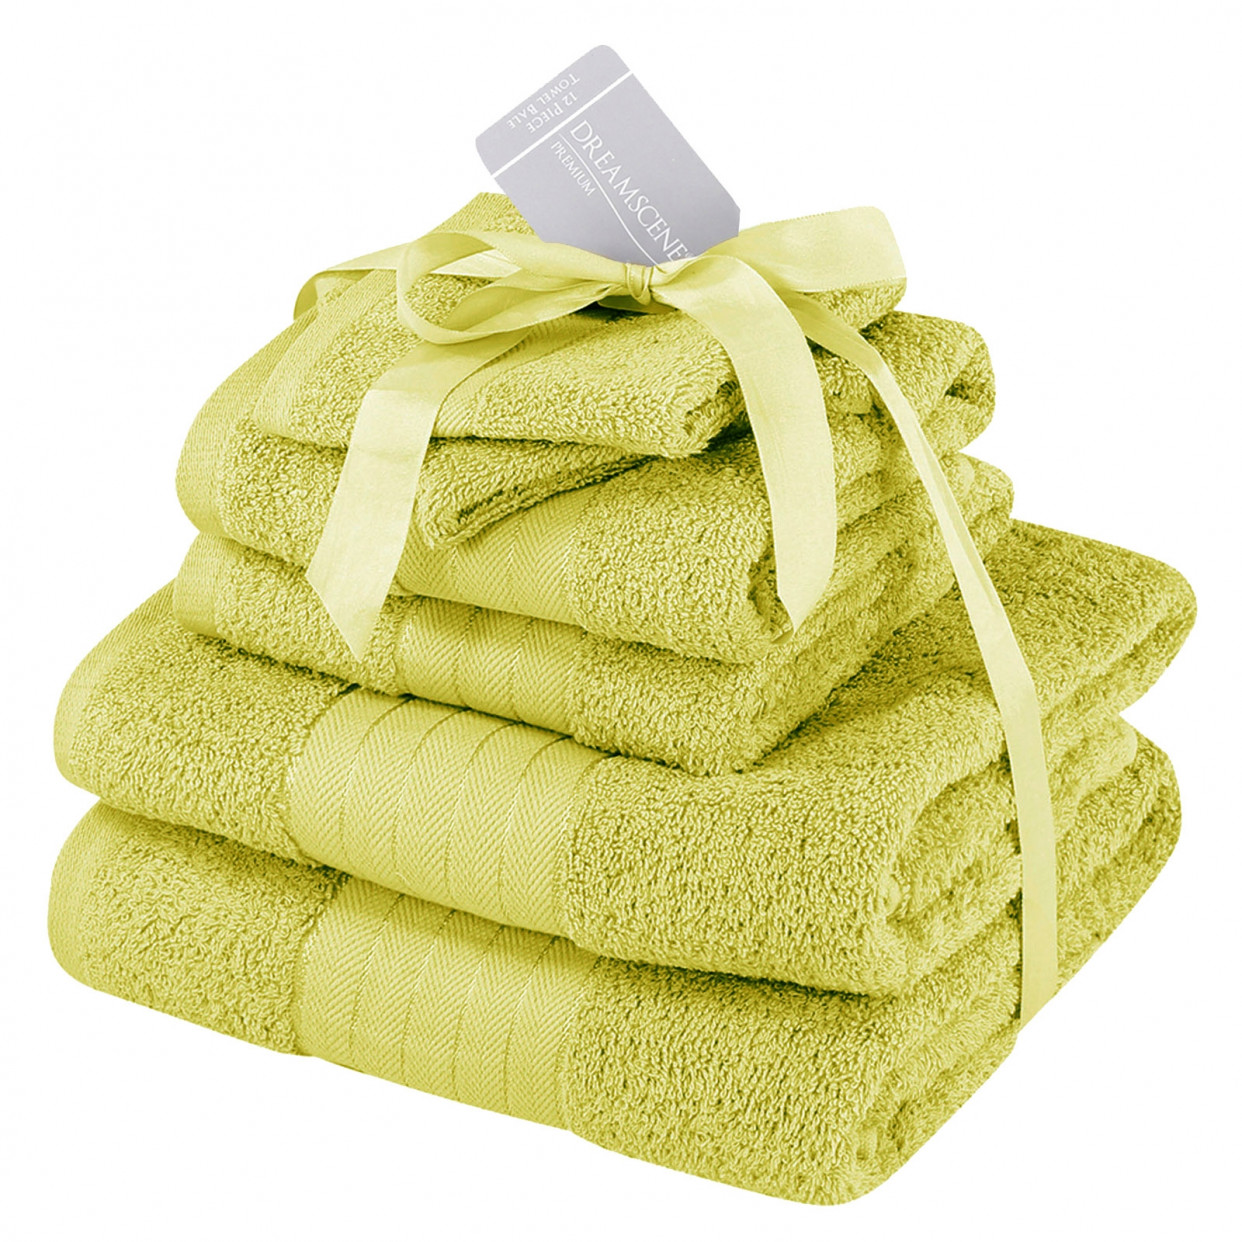 Dreamscene Towel Bale 6 Piece - Lime>